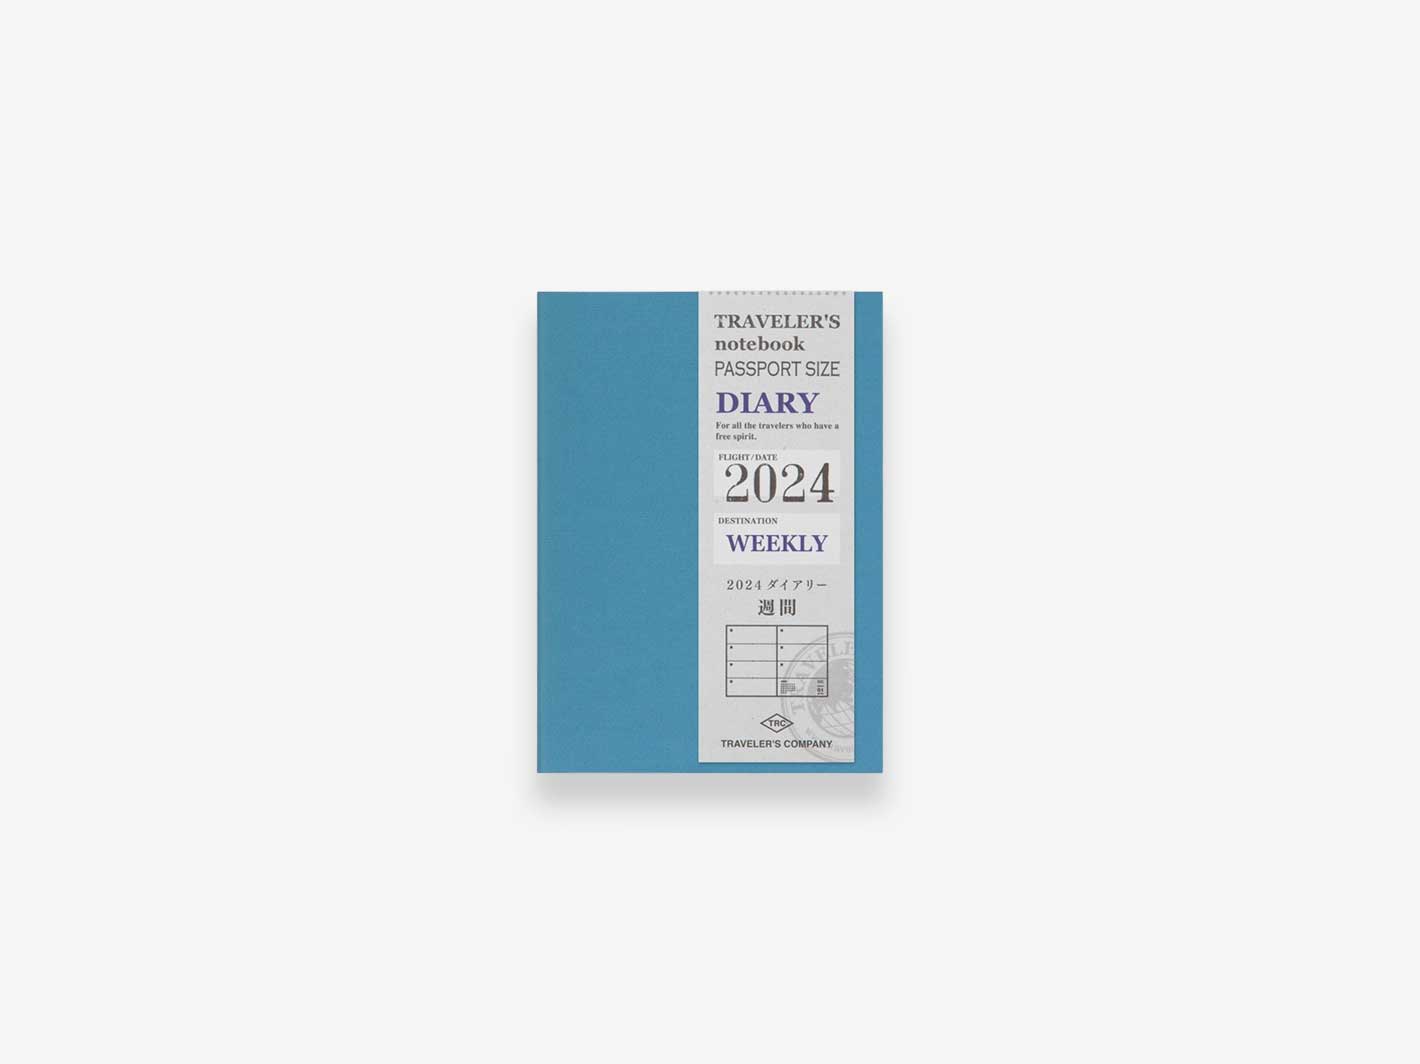 2024 TRAVELER'S notebook Weekly Diary Passport Size